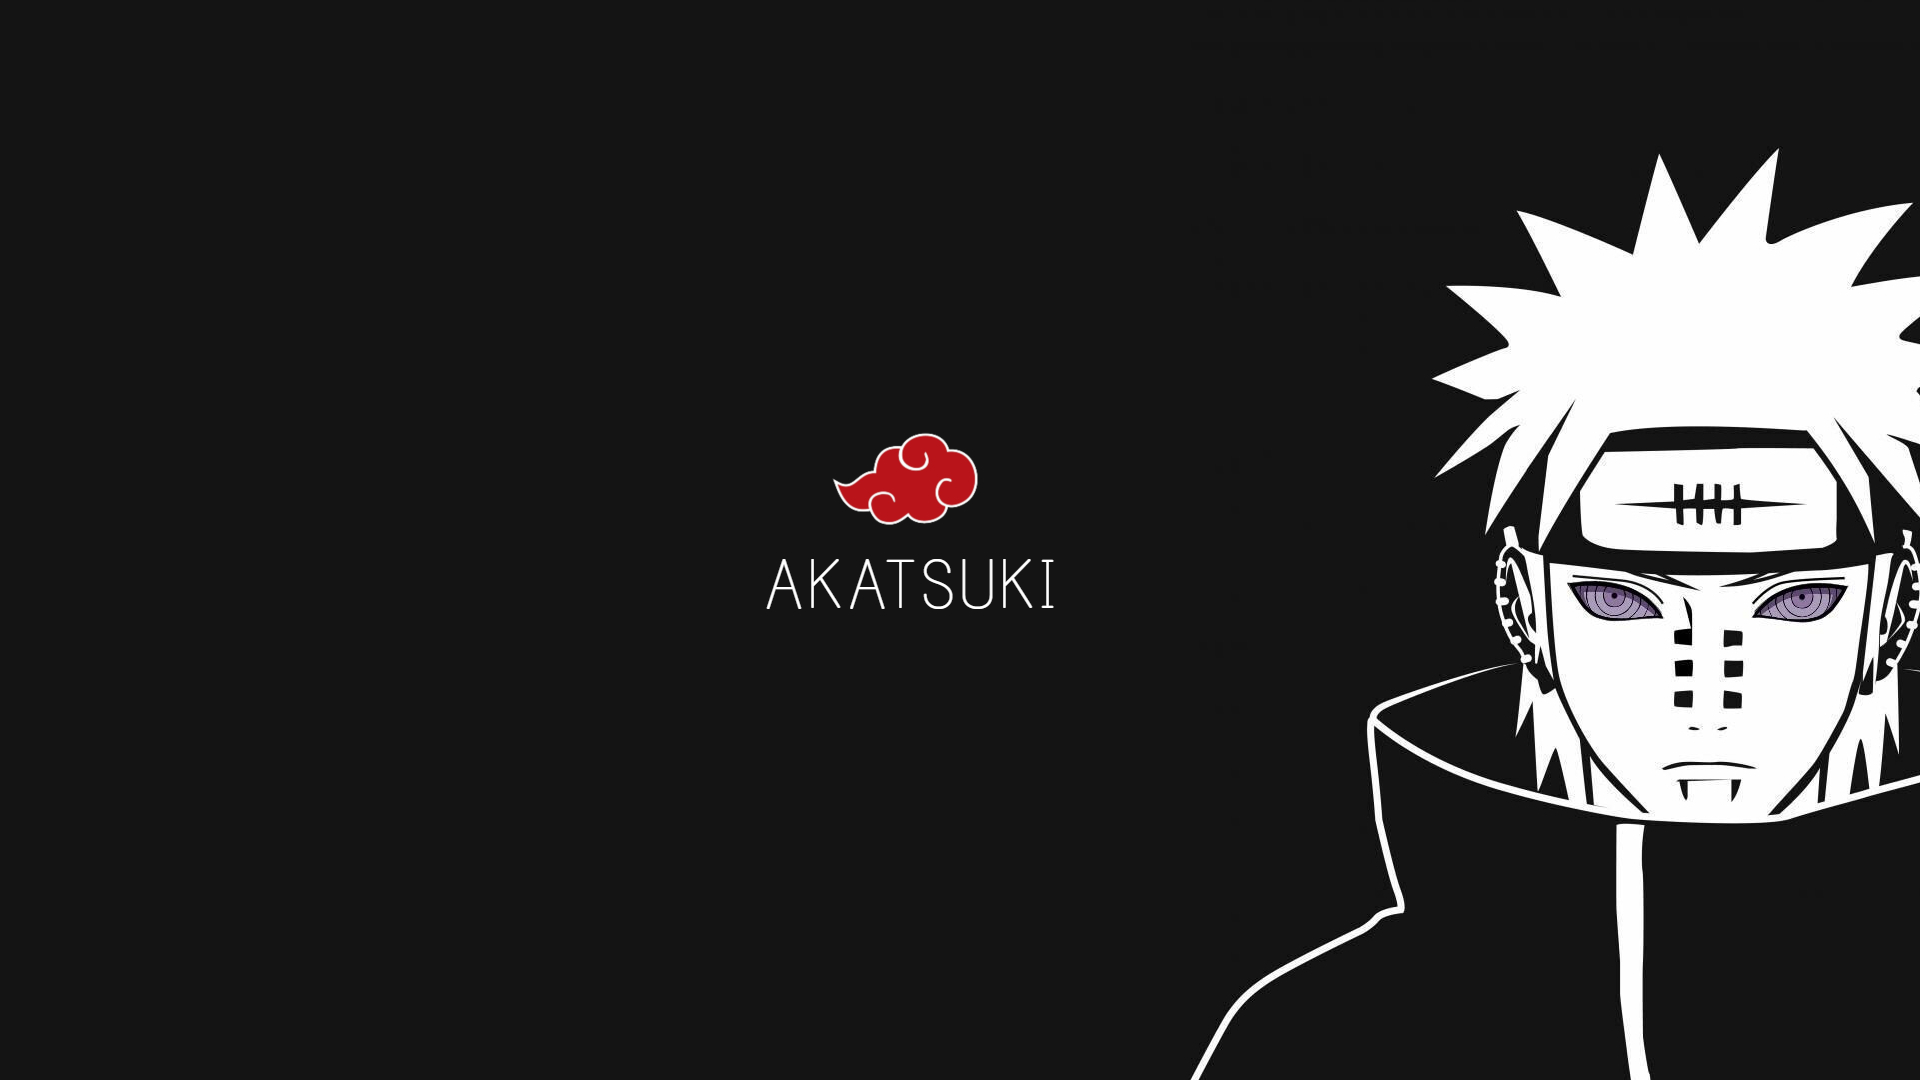 Akatsuki Naruto Wallpaper, HD Anime 4K Wallpapers, Images, Photos and Background